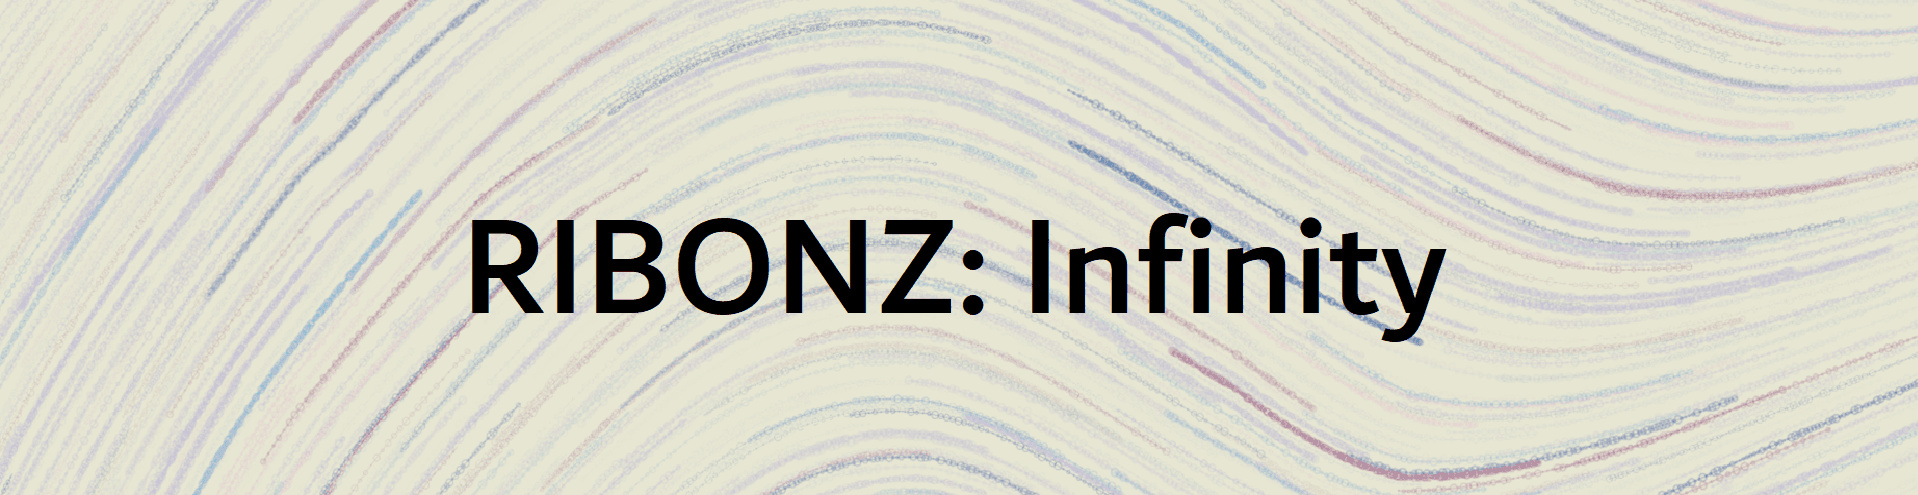 RIBONZ: Infinity